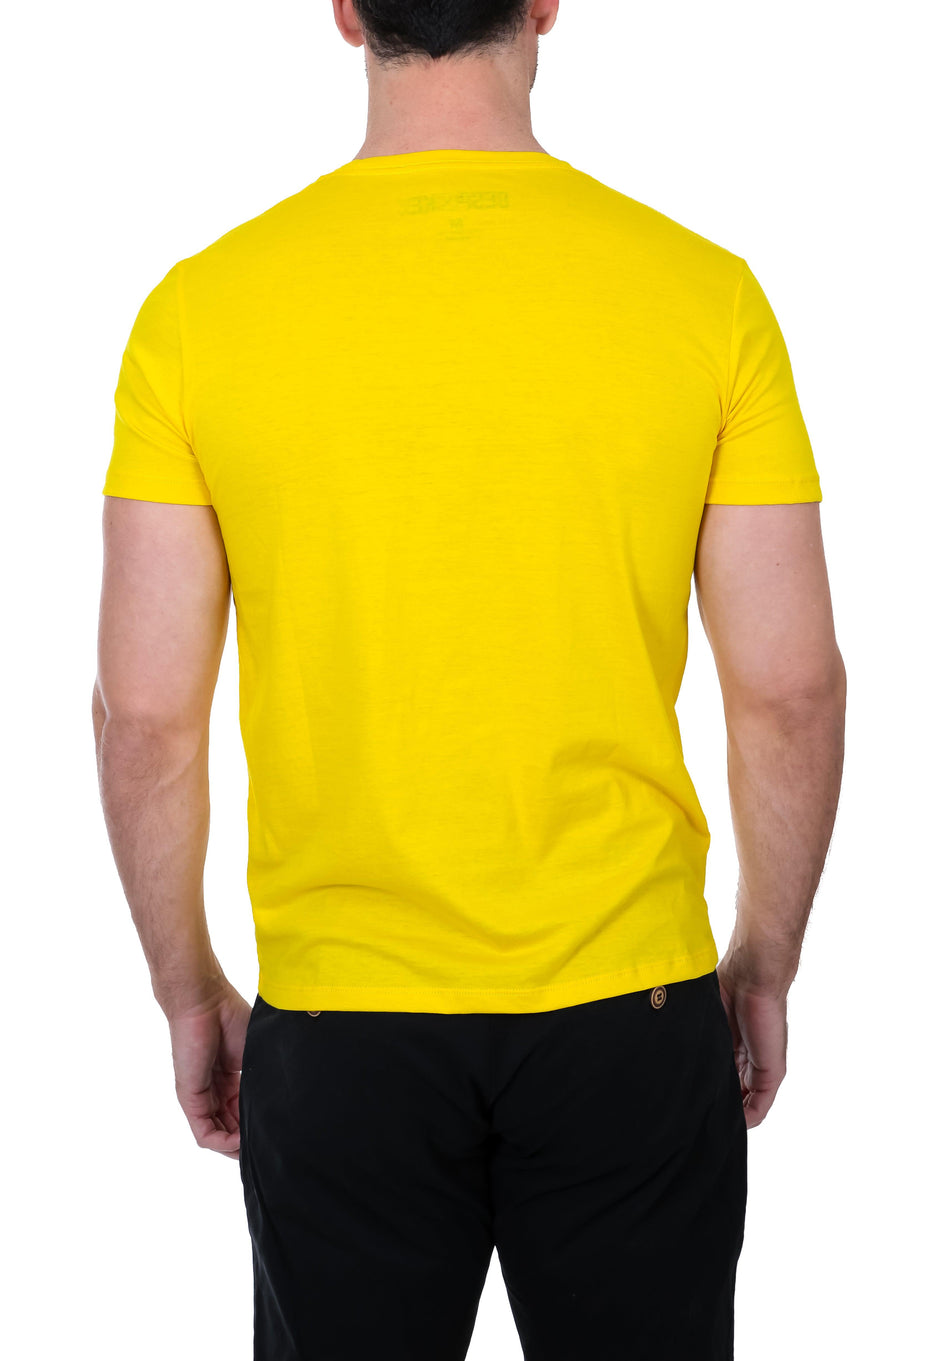 Men's Essentials Cotton V-Neck Solid Yellow